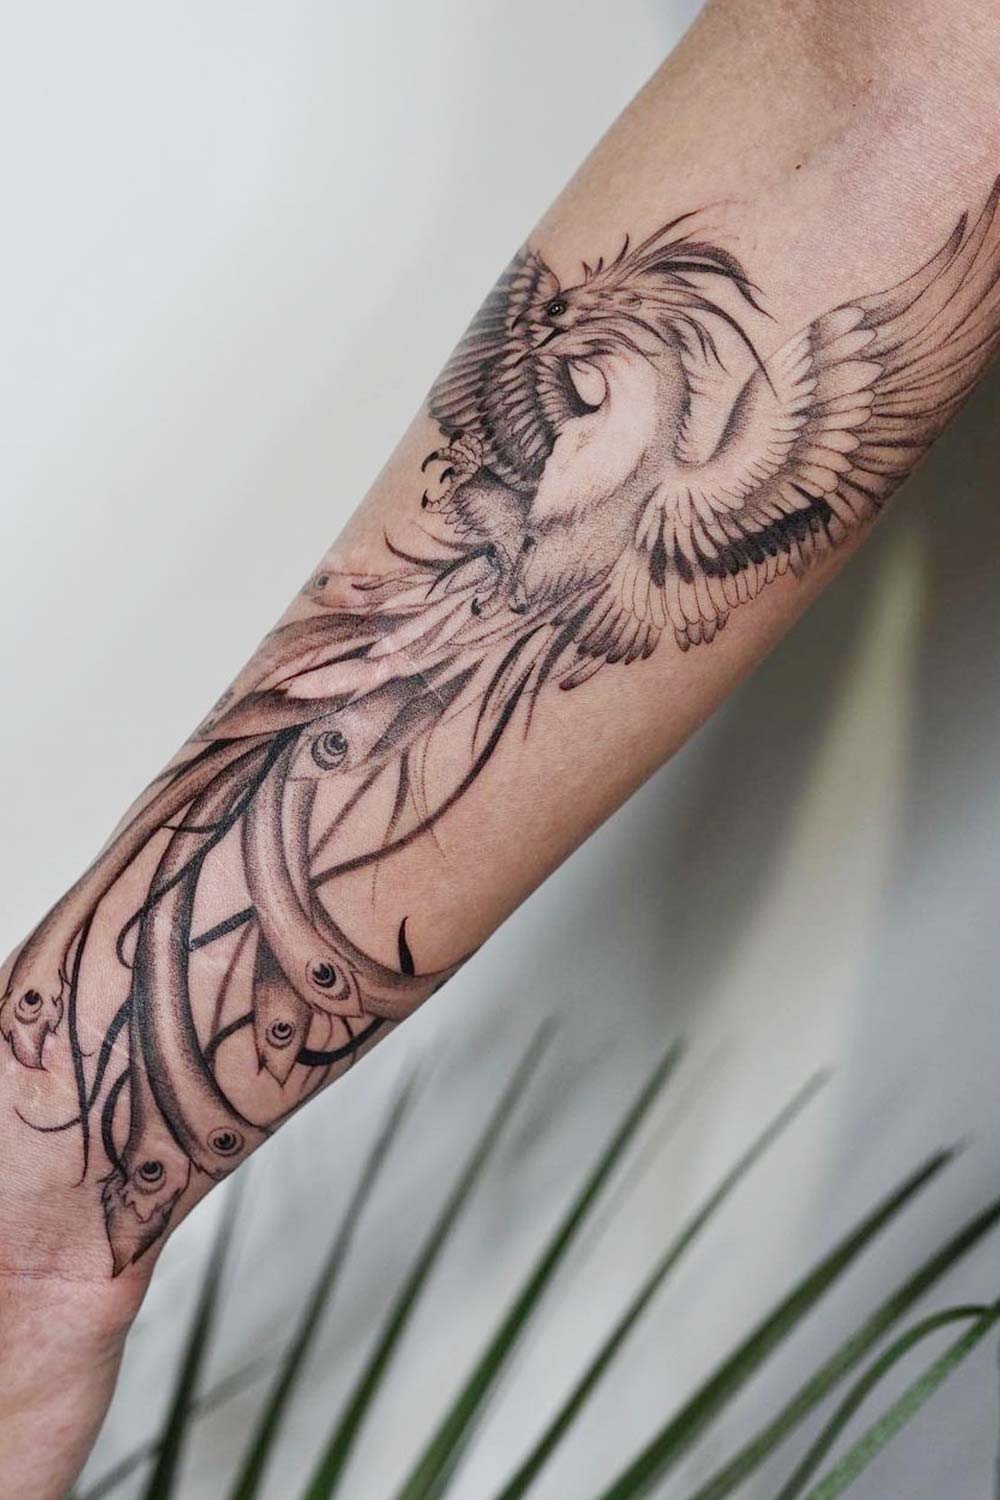 Forearm Detailed Phoenix Tattoo Design